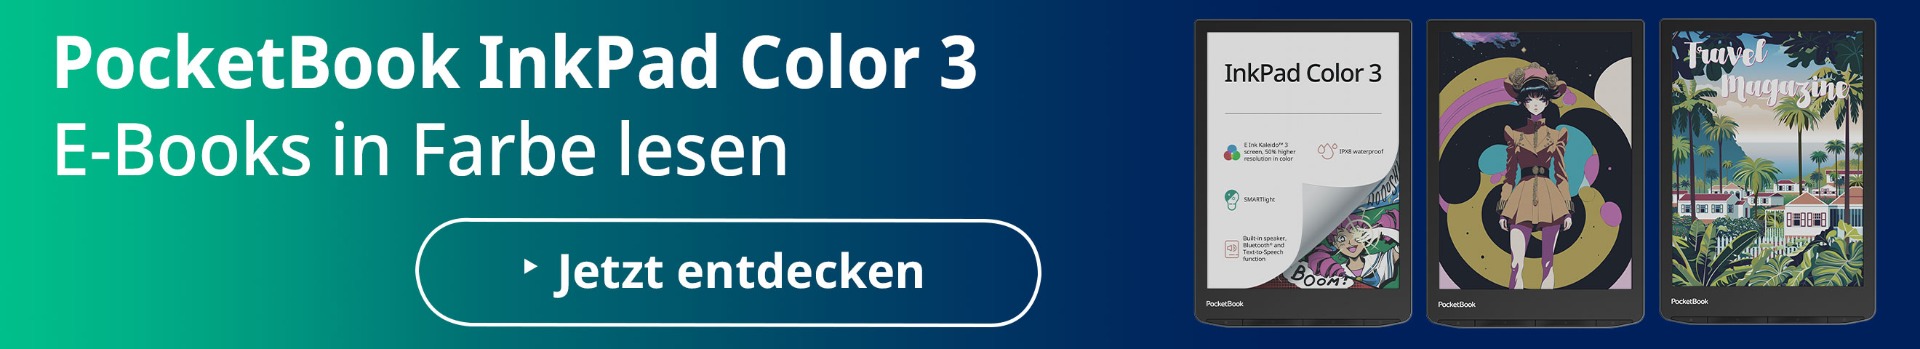 NEU: PocketBook InkPad Color 3 ist erhältlich